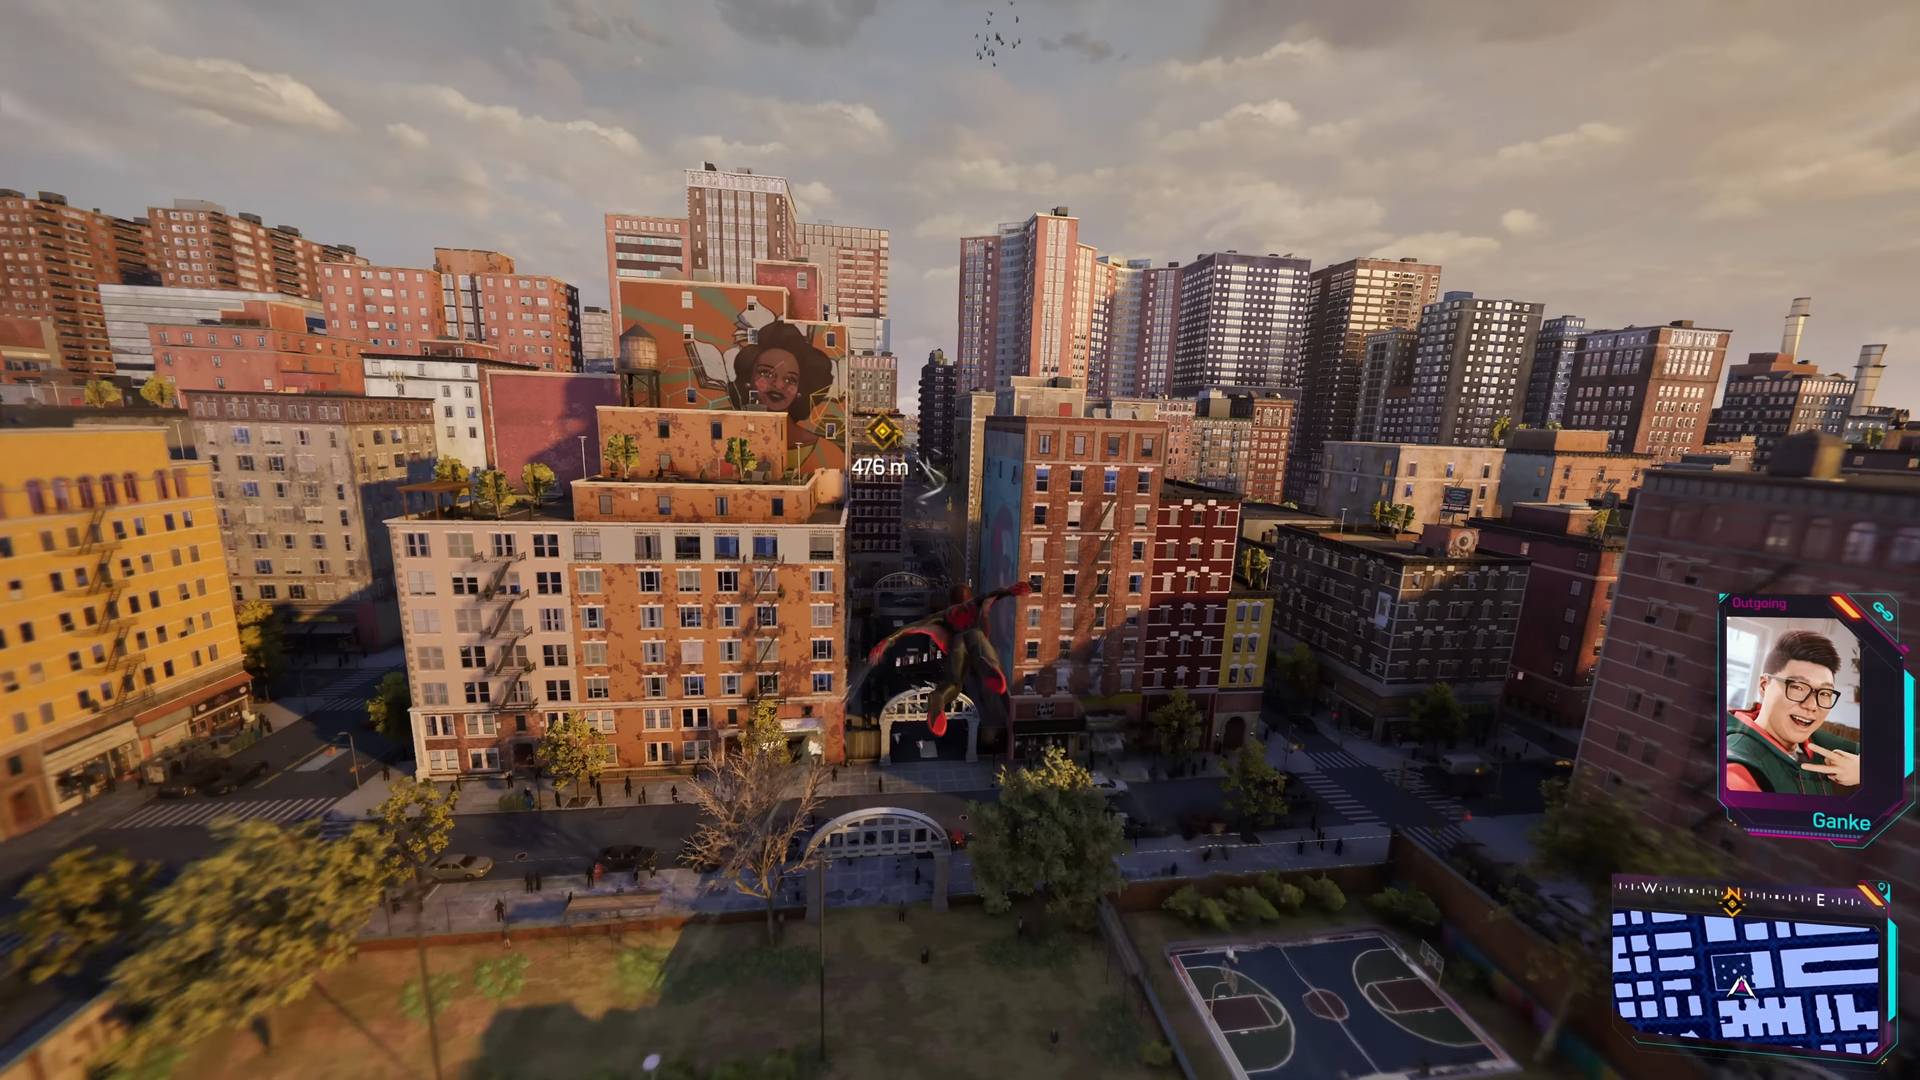 《Marvel’s Spider-Man 2》地图将会比前作更大！让玩家拥有不一样的体验！